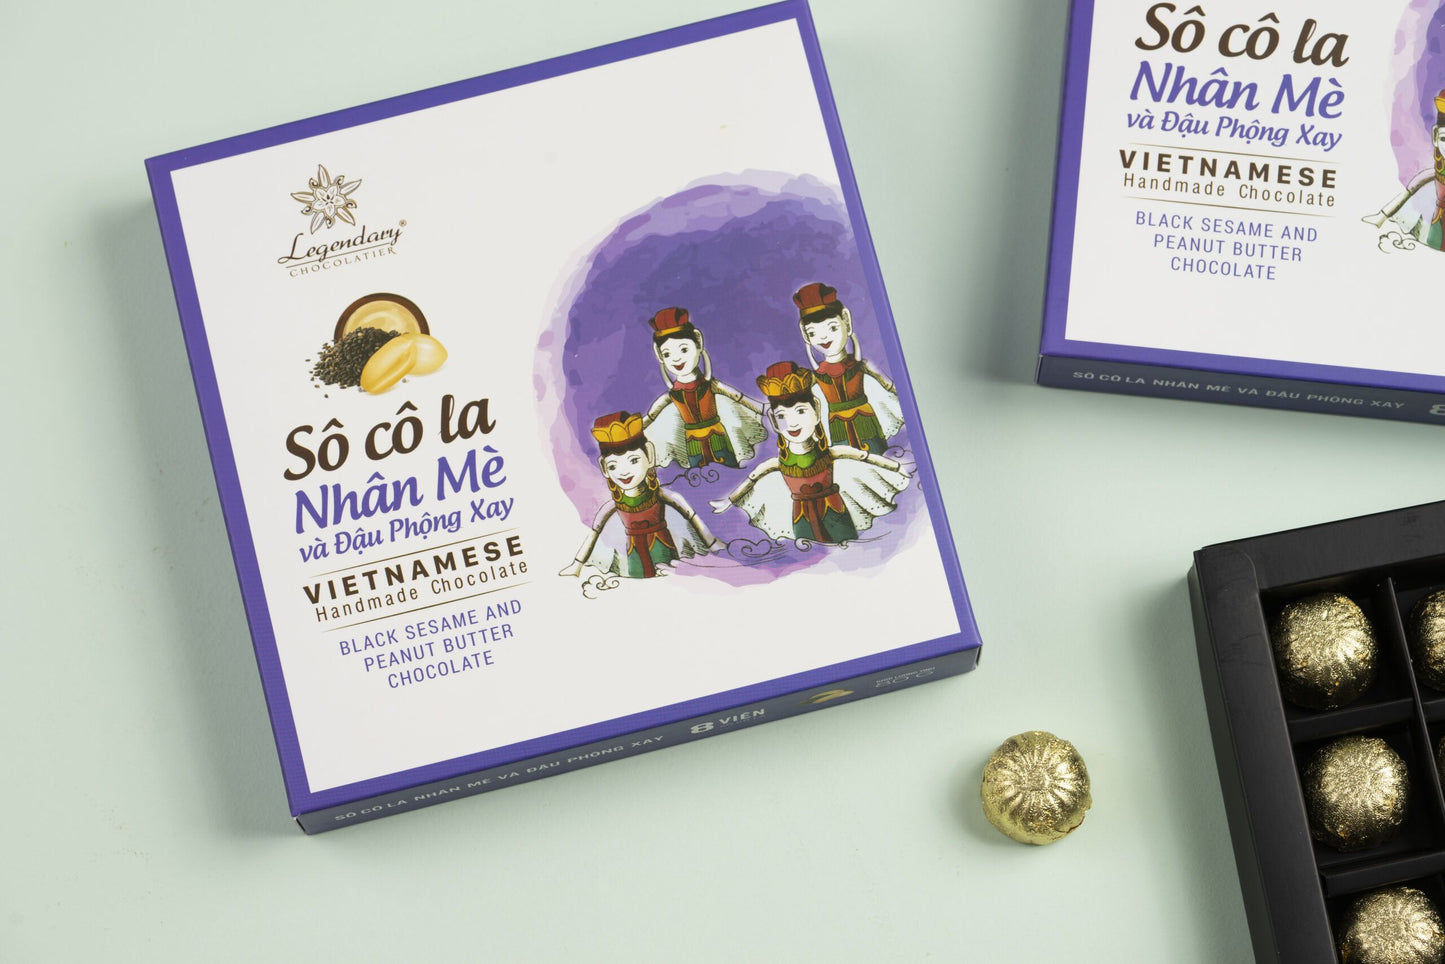 Legendary Chocolatier – Black Sesame And Peanut Butter Chocolate– Vietnam Zoom Gift Sets 8 Pieces